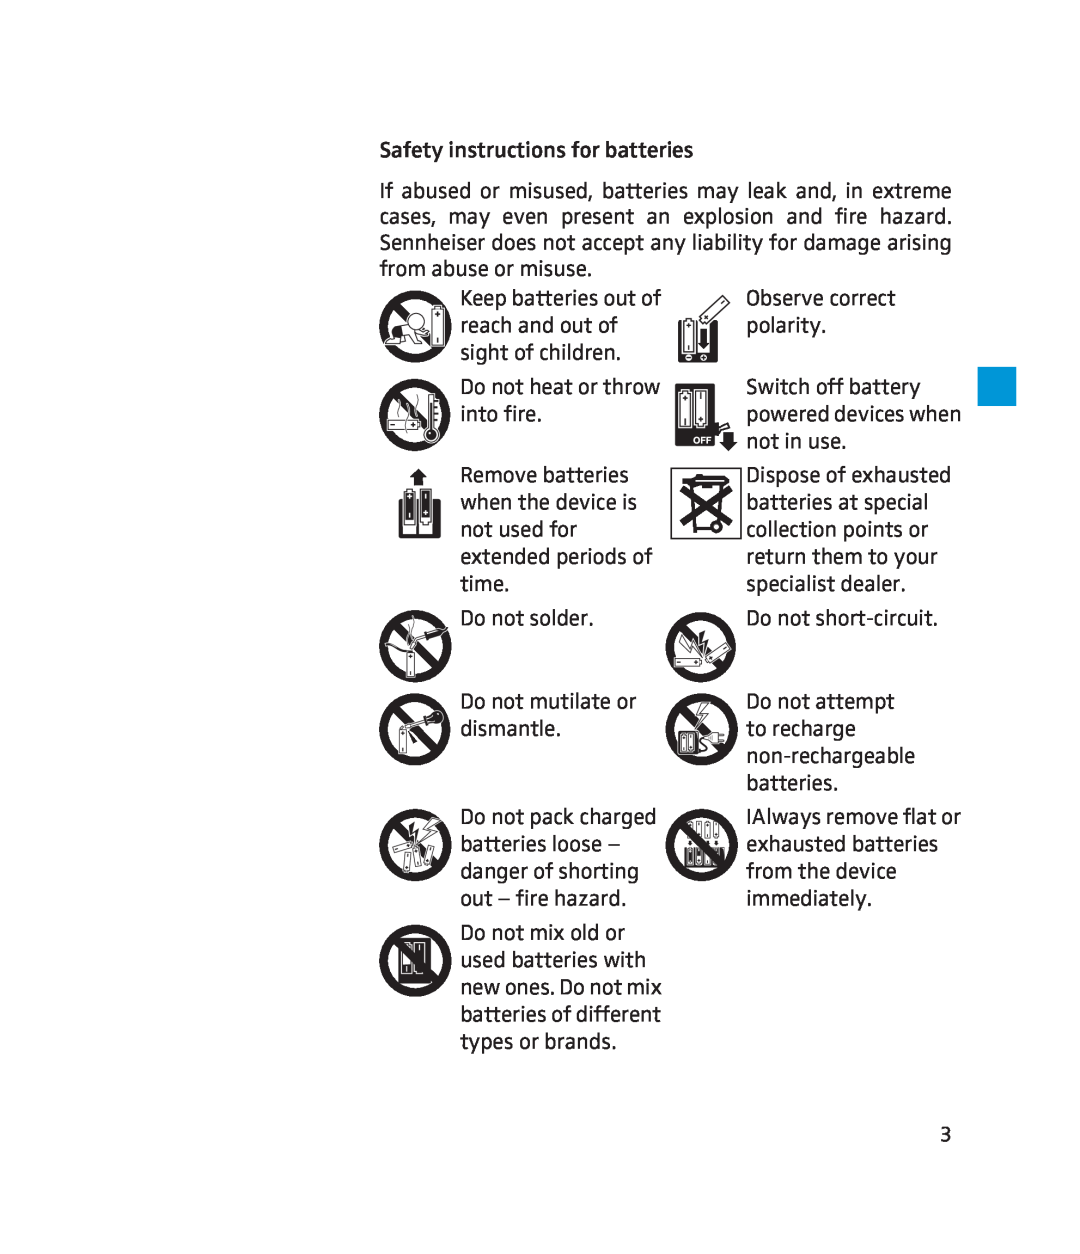 Sennheiser 250 instruction manual Safety instructions for batteries 